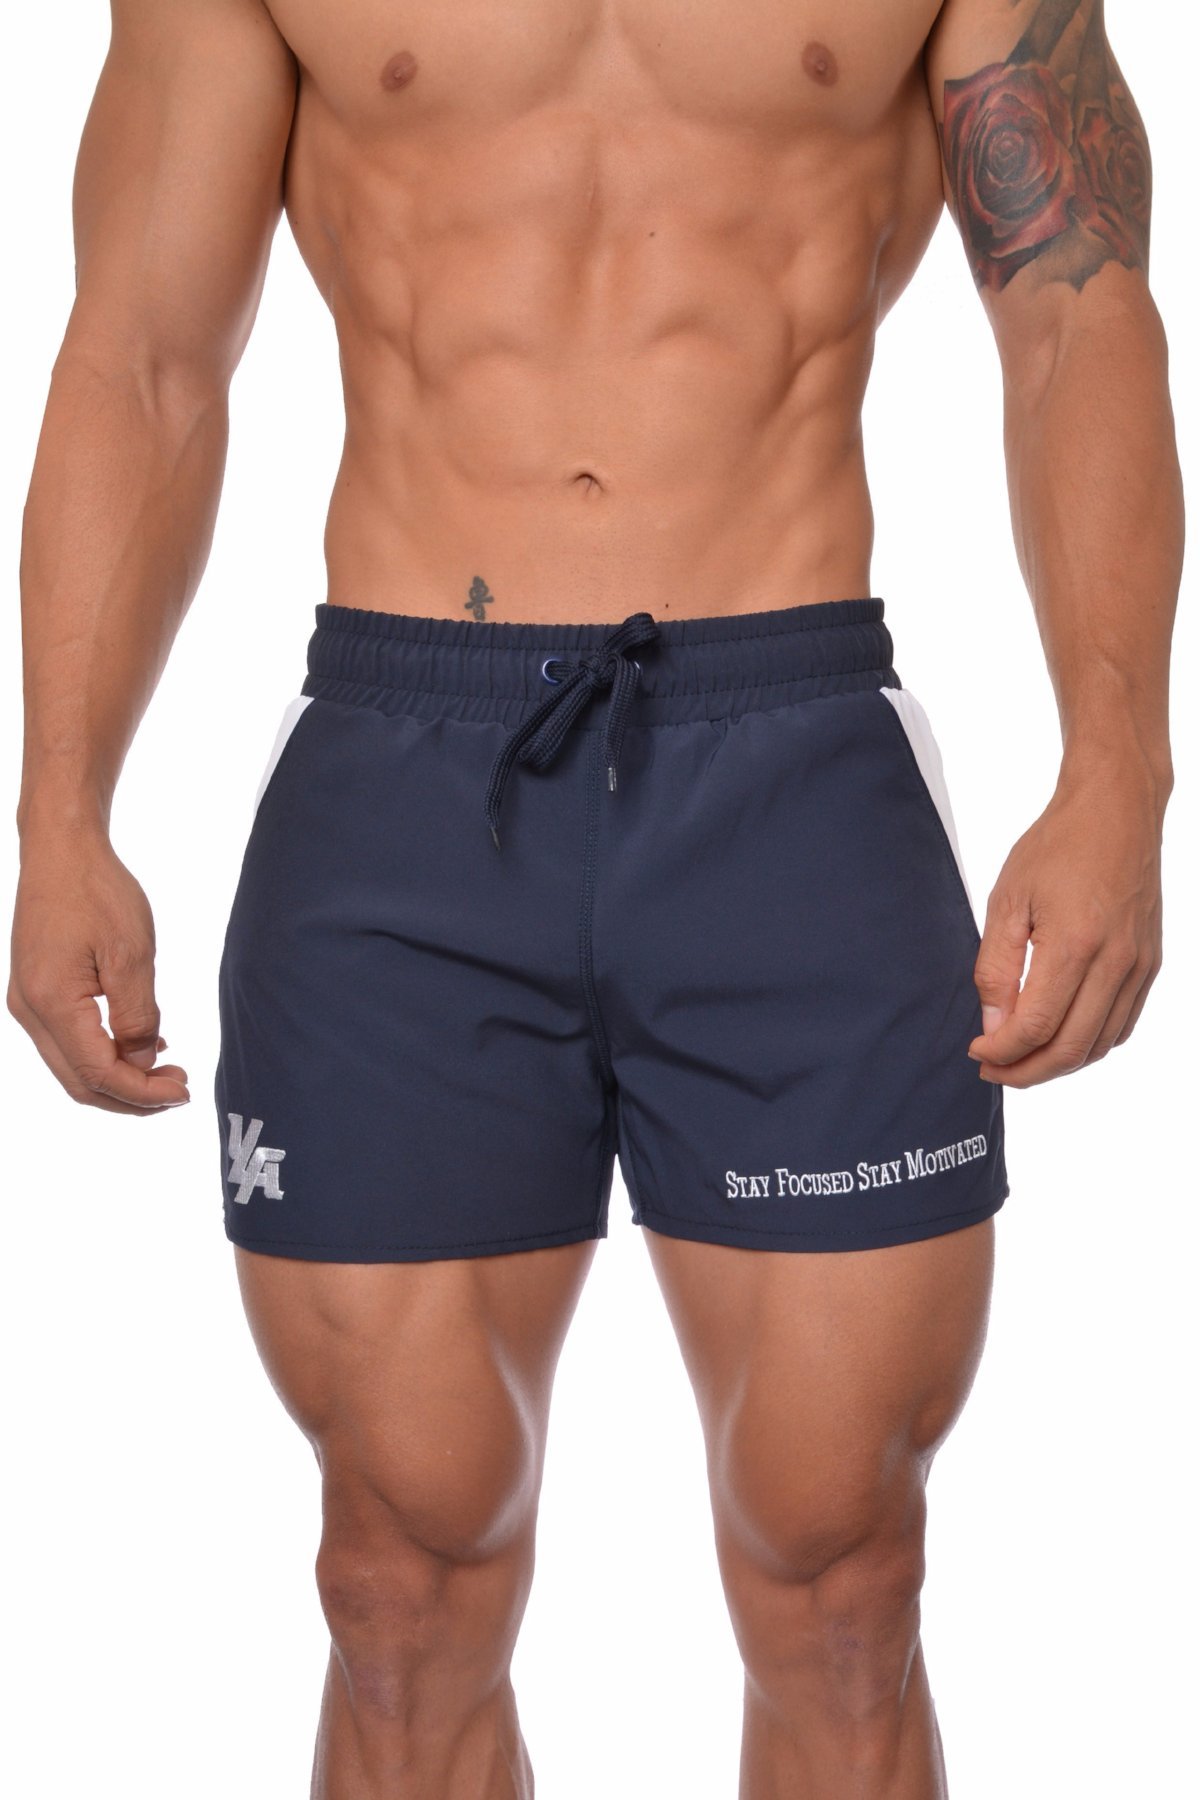 mens short shorts youngla menu0027s bodybuilding lift shorts w/ zipper pockets 101 navywhite ... FUSJBCP